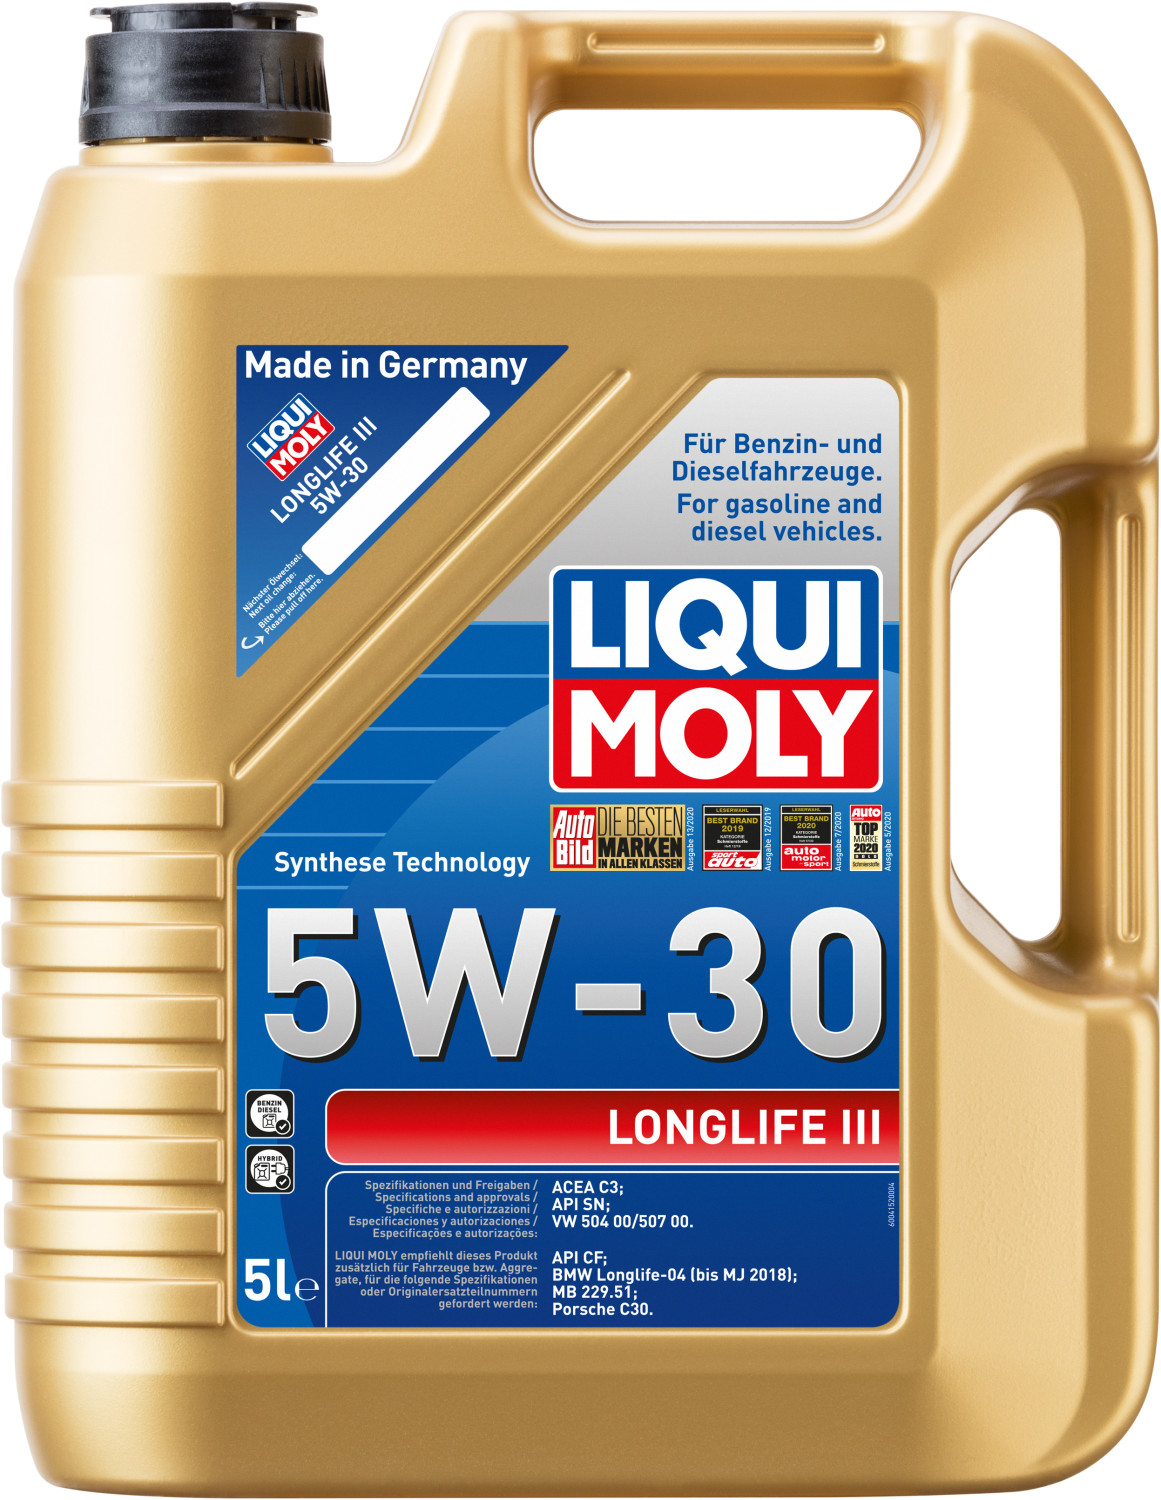 LIQUI MOLY Longlife III 5W30 (5 l) ab € 39,99